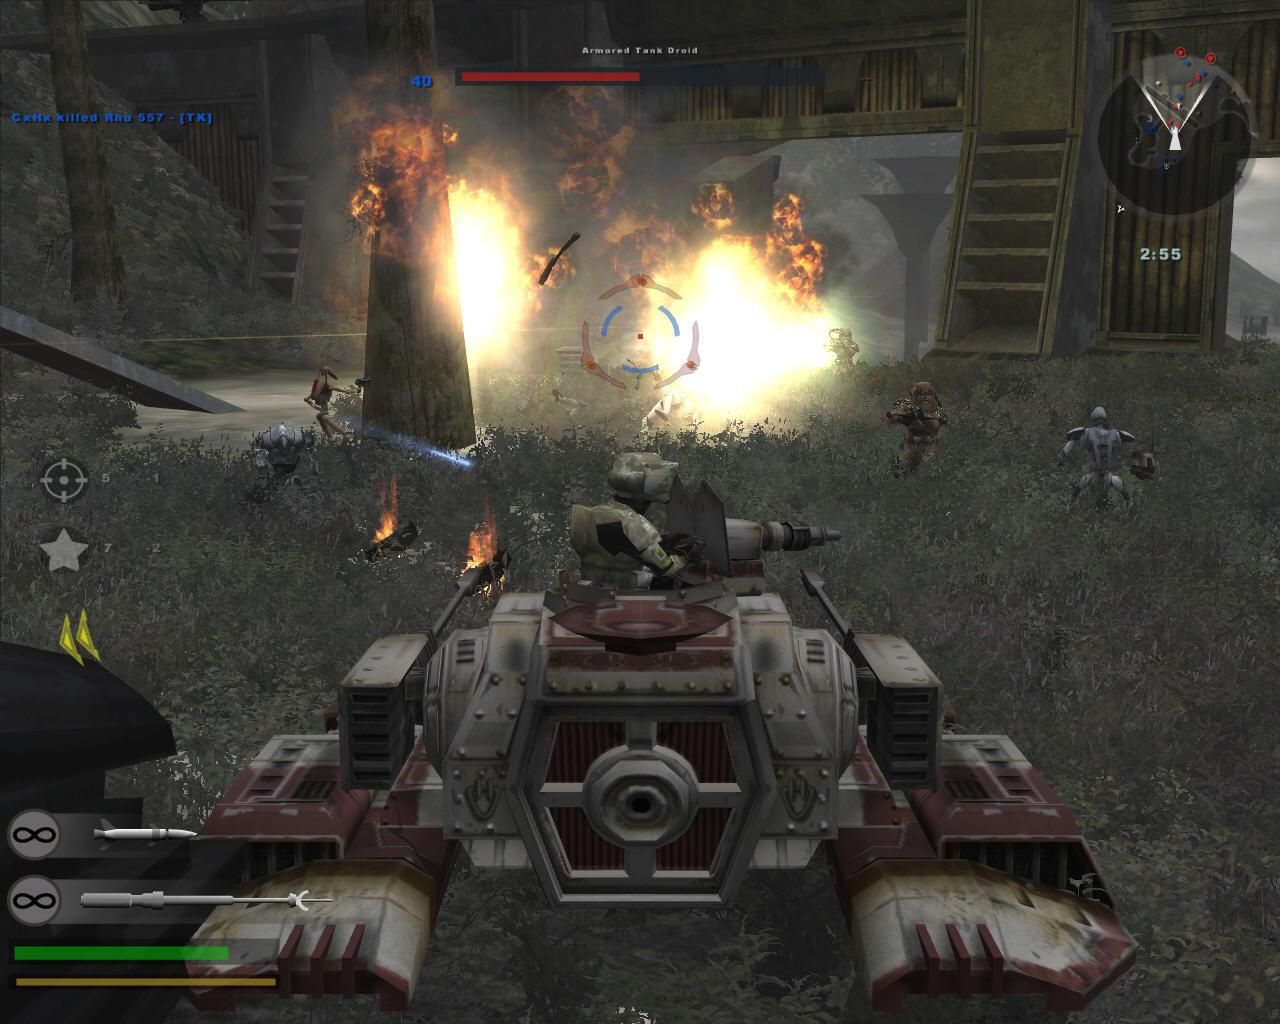 download star wars battlefront ii 2005 for free